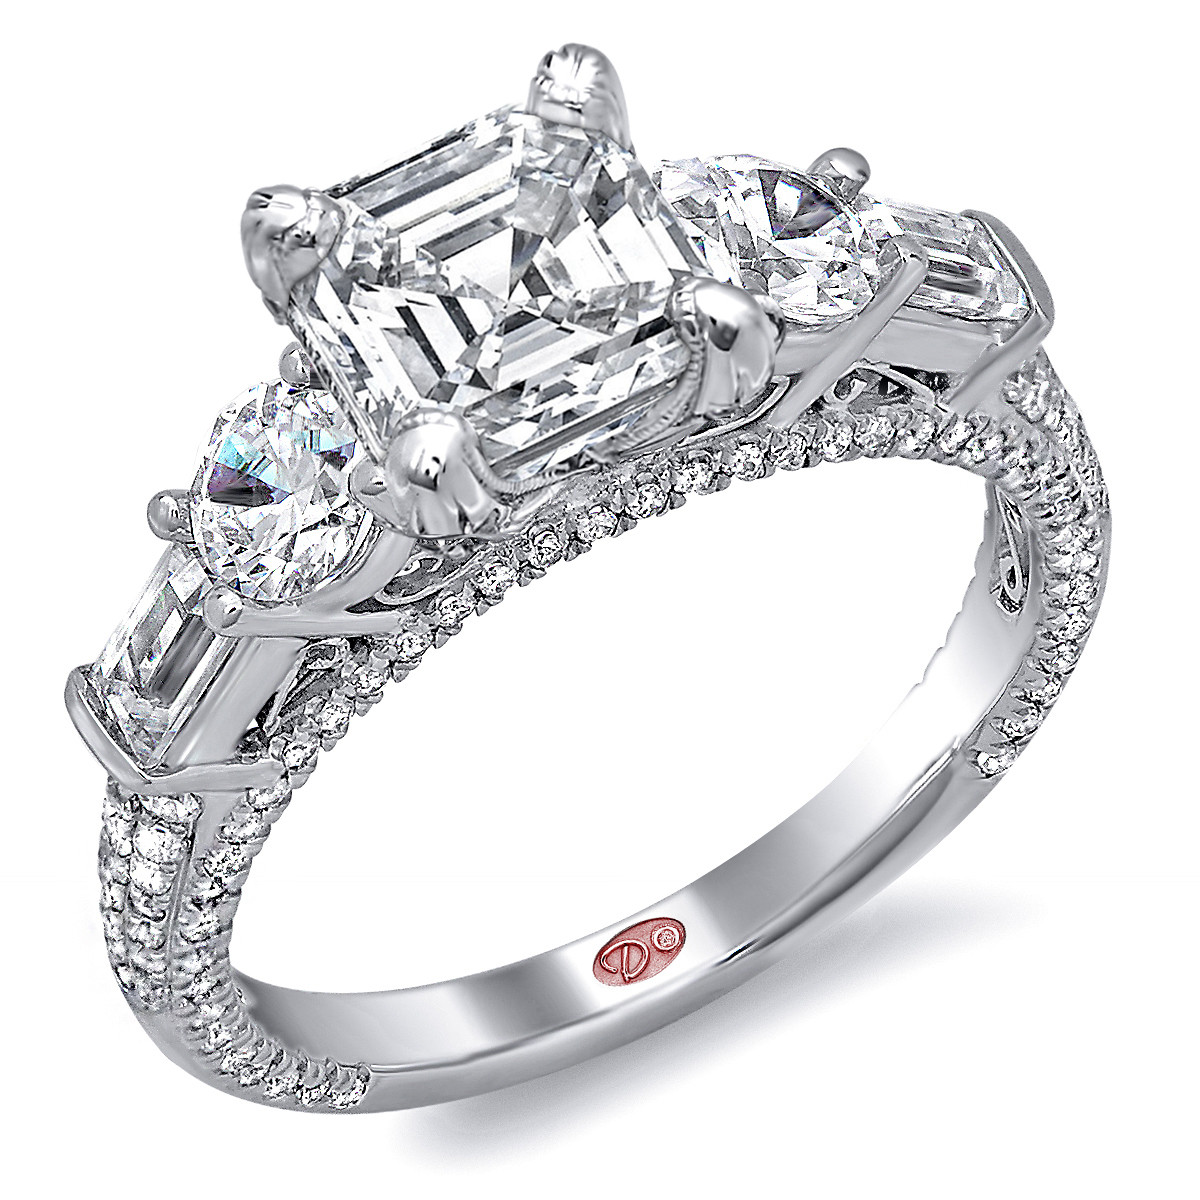 Designer Diamond Engagement Rings
 Unique Engagement Rings DW4875